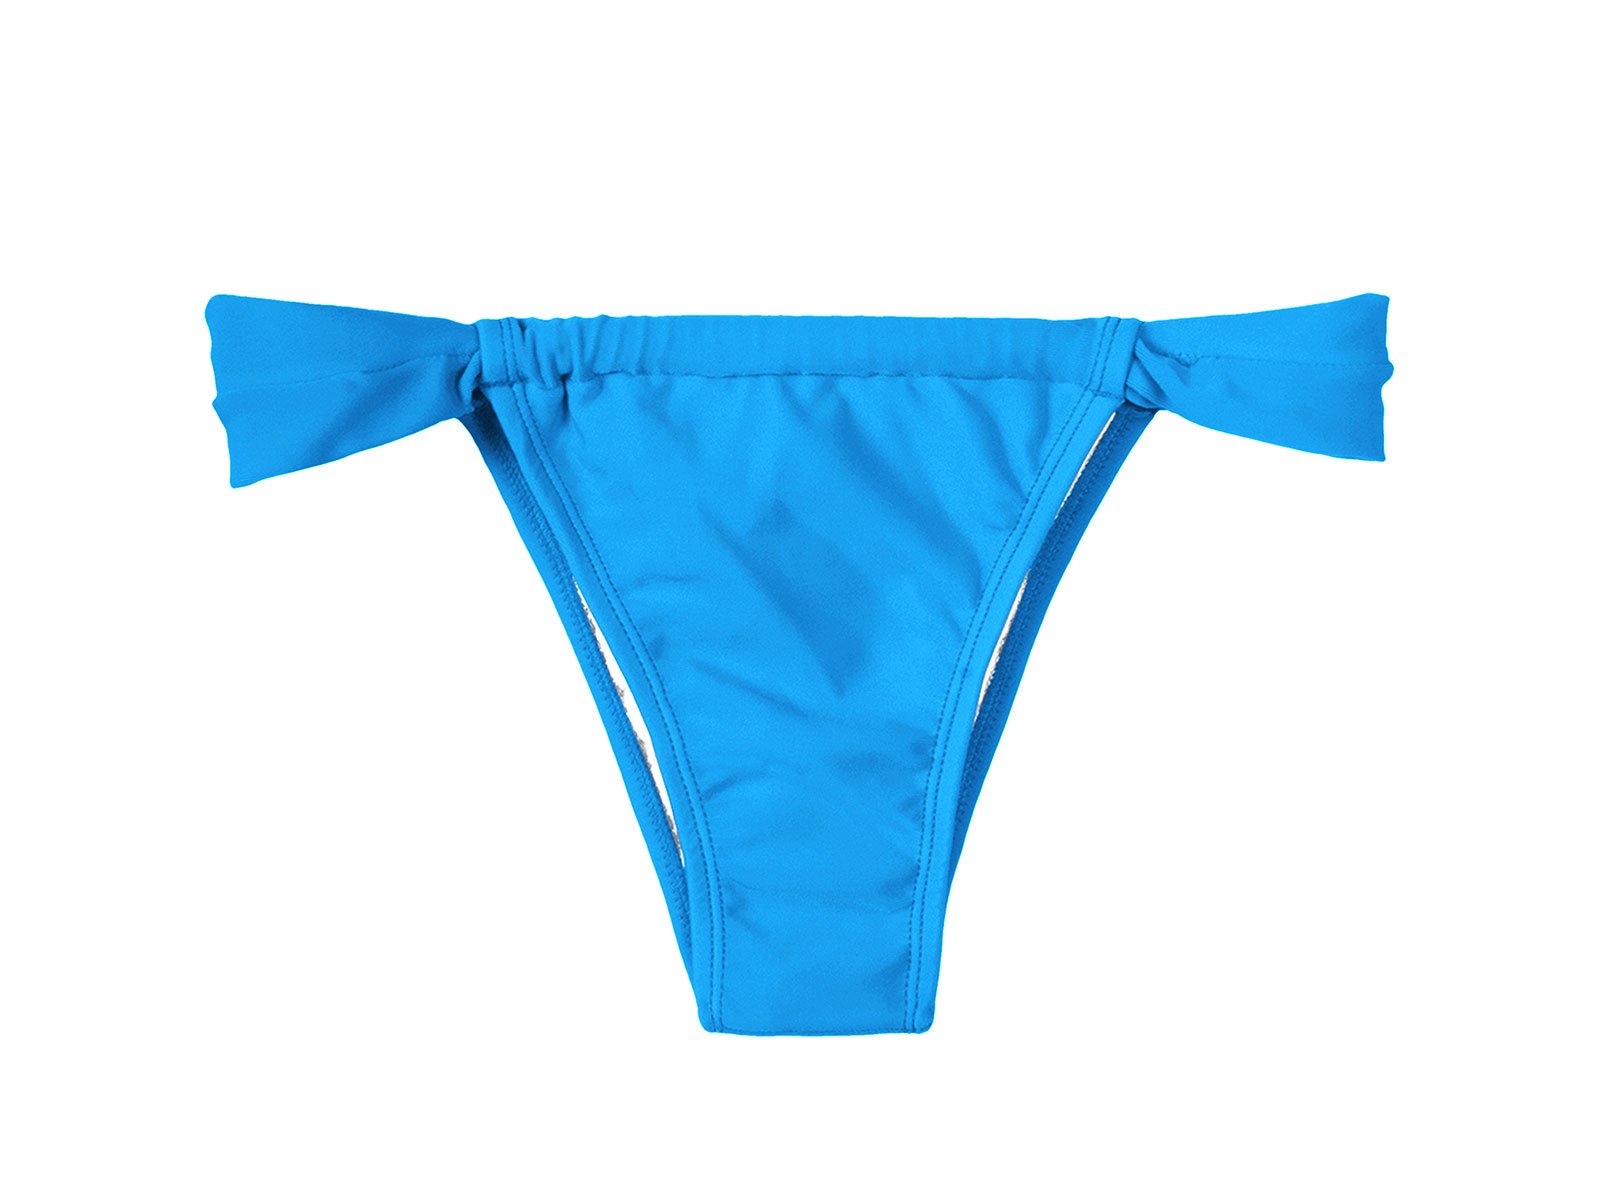 Bikini Bottoms Brazilian Bottom - Blue Sumo - Brand Rio de Sol